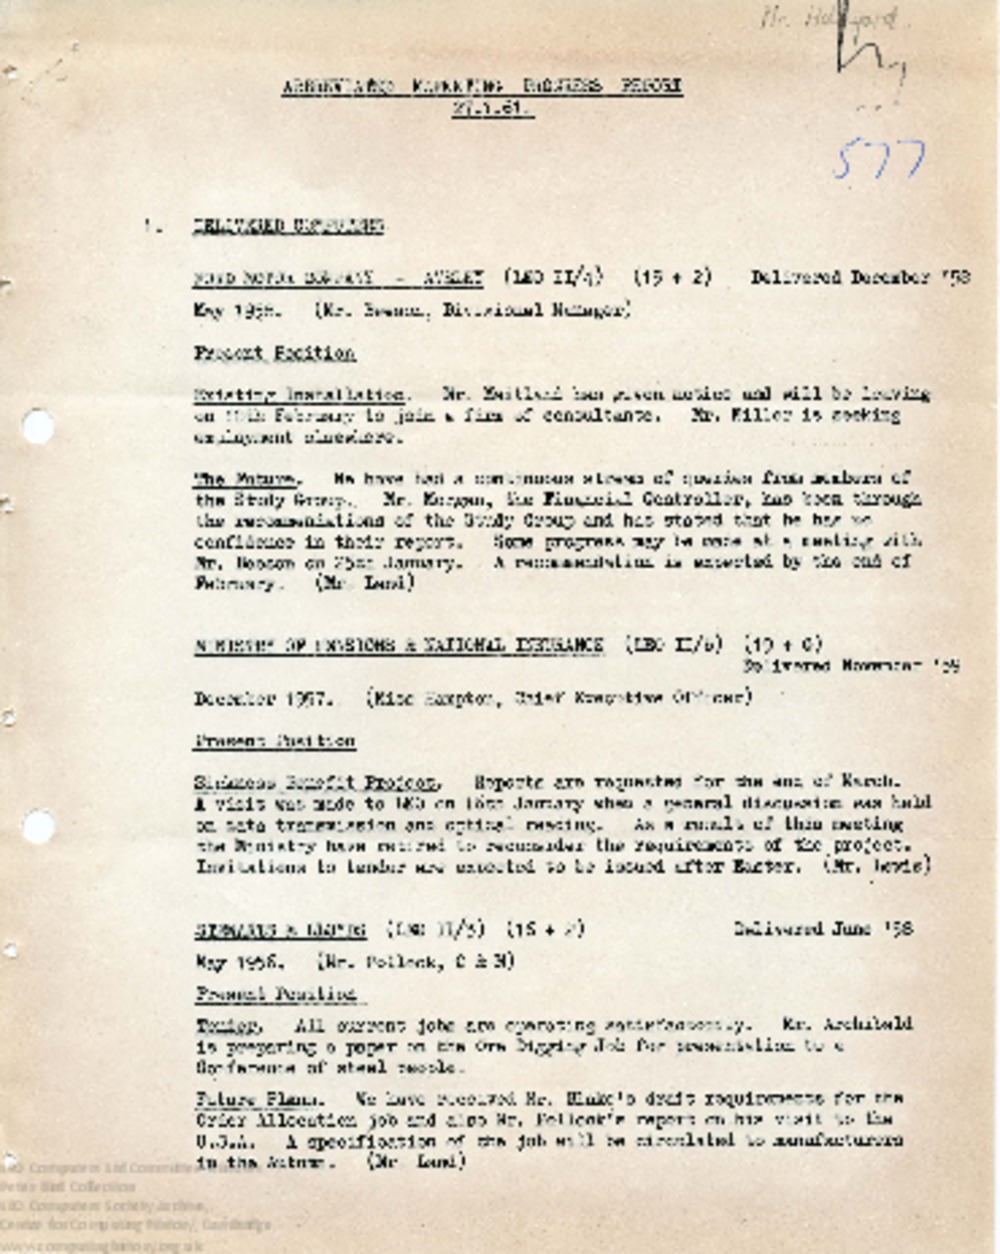 Article: 64495 Abbreviated Marketing Progress Report, 27th Jan 1961